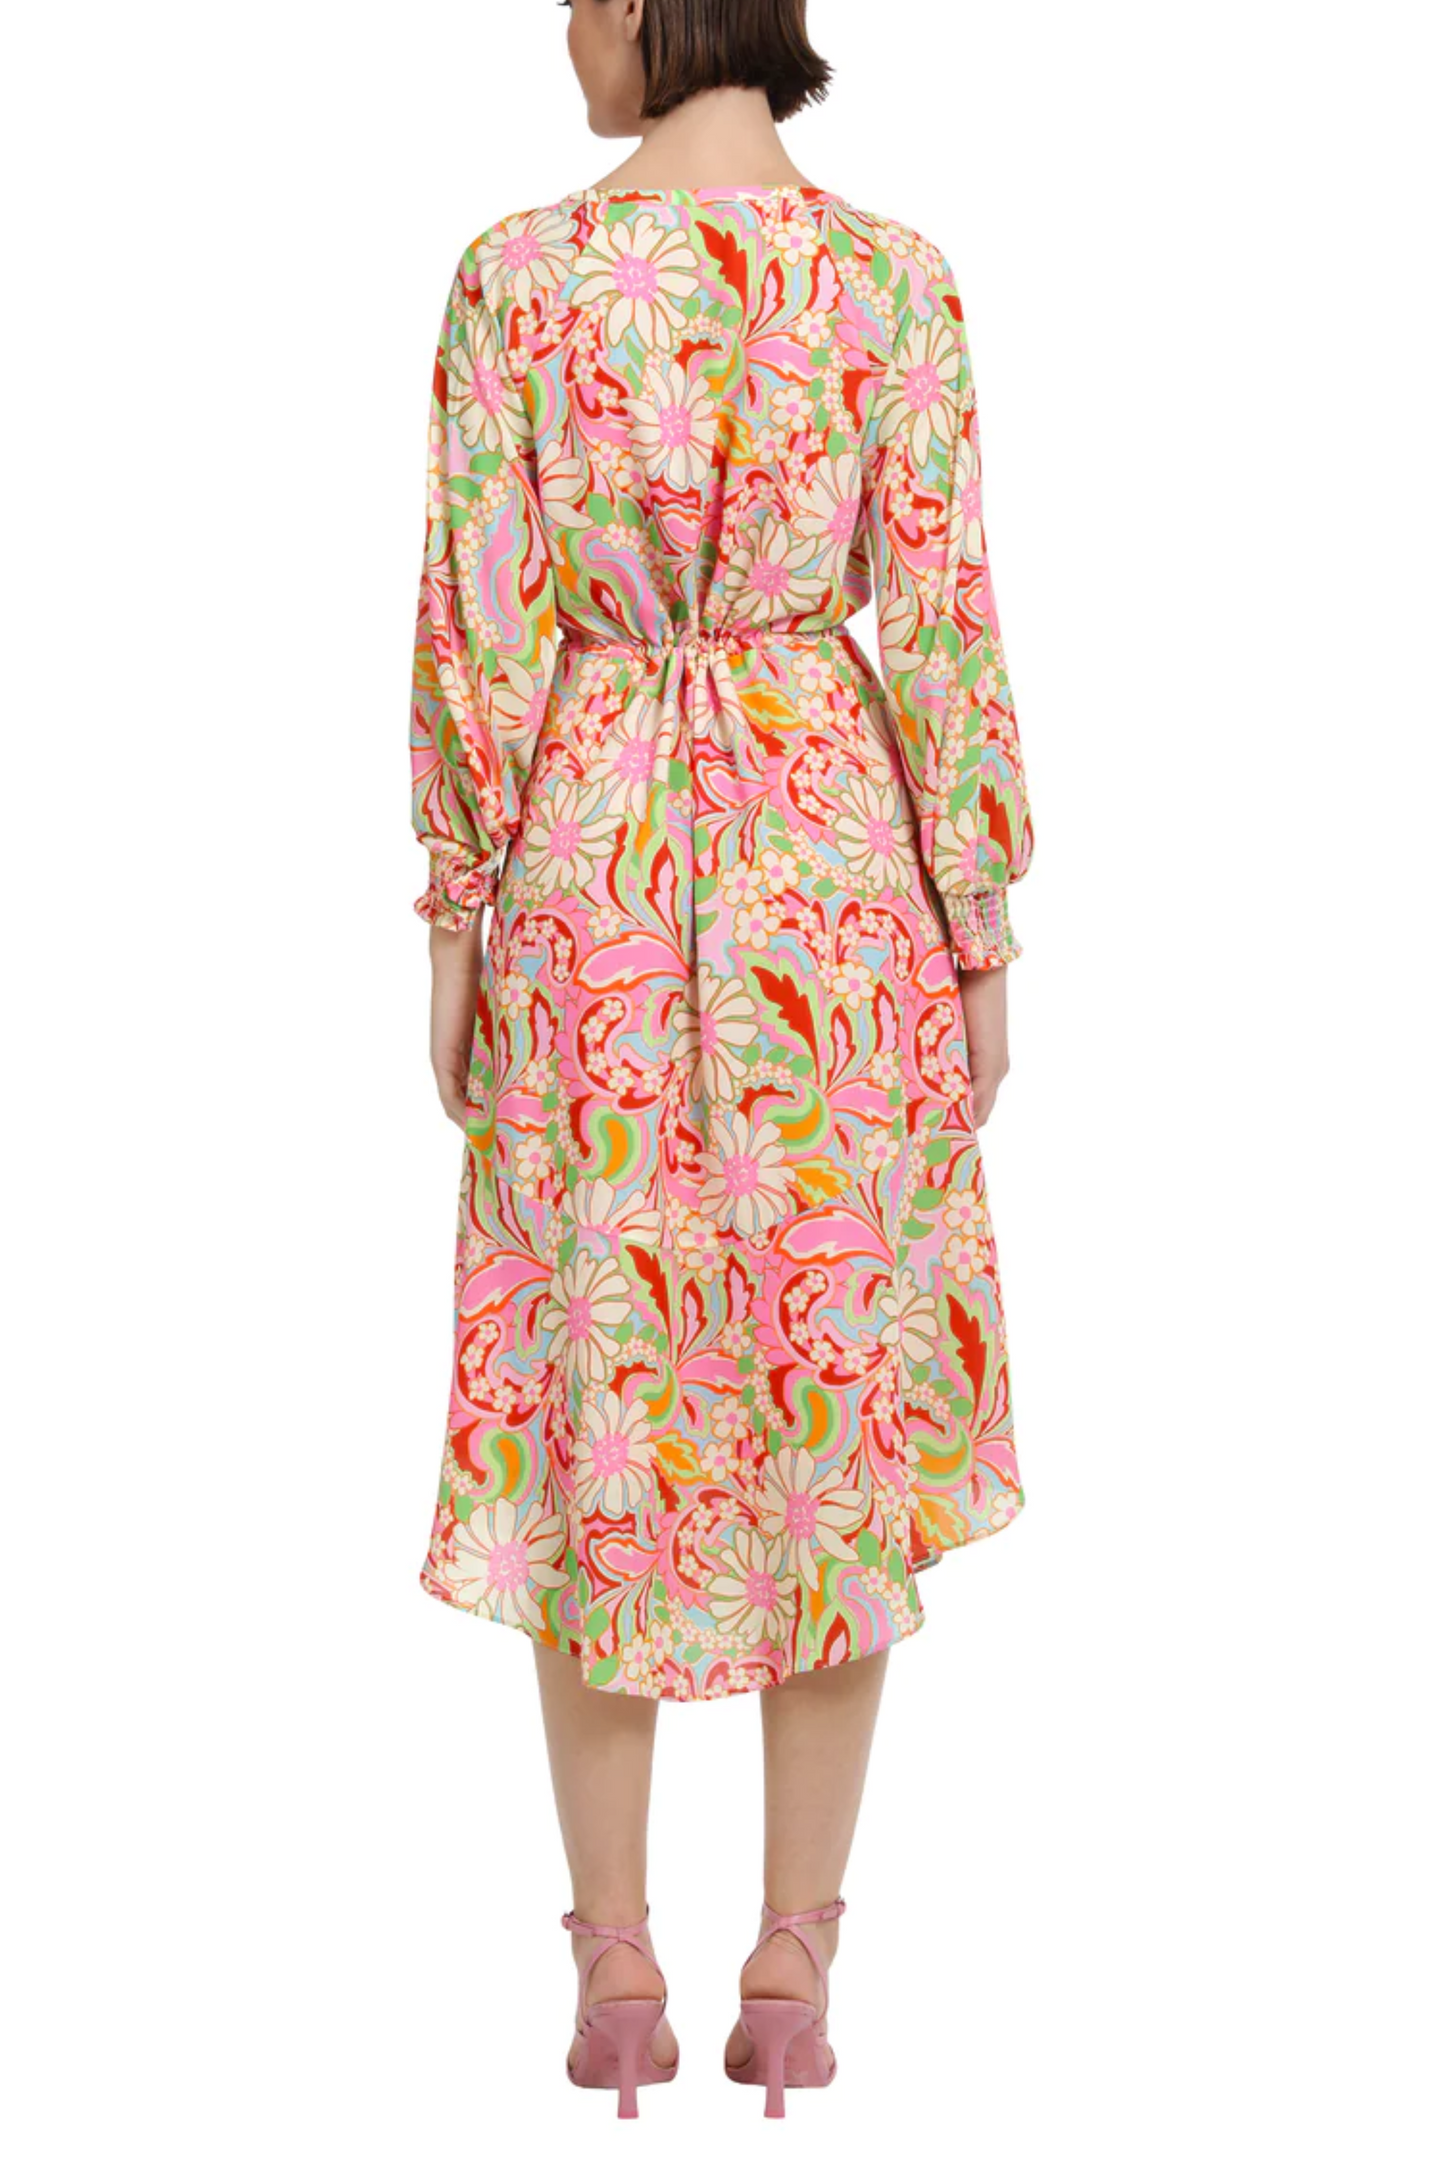 Donna Morgan Long Sleeve Floral Midi Dress